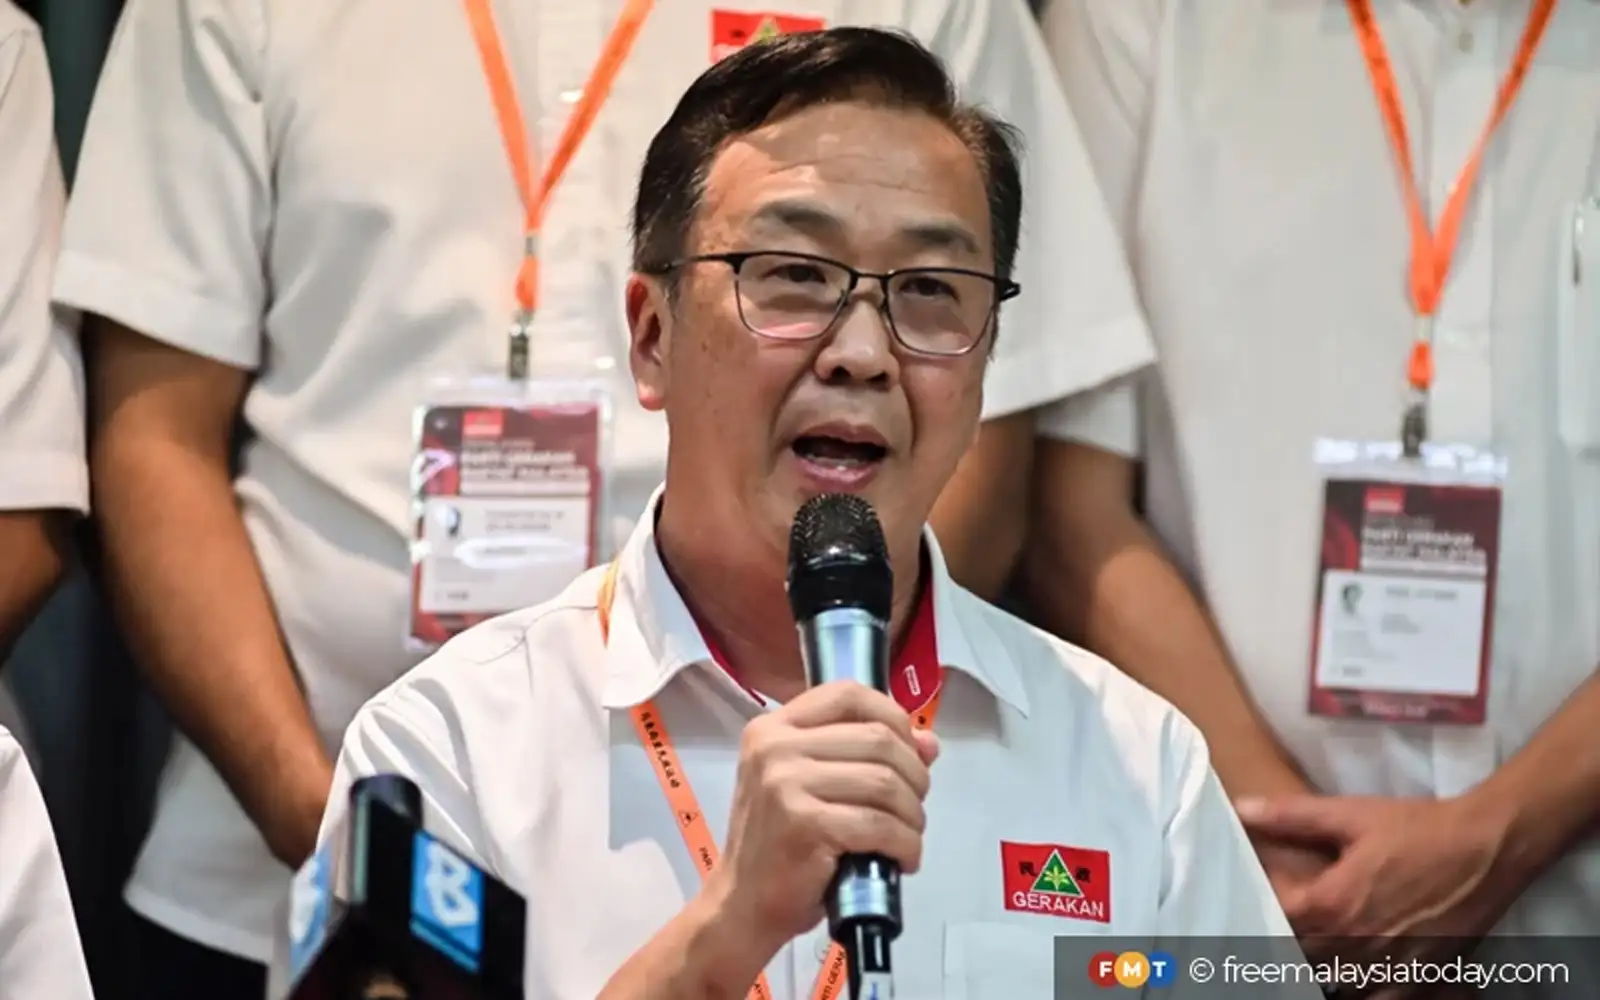 gerakan to contest kuala kubu baharu, says president